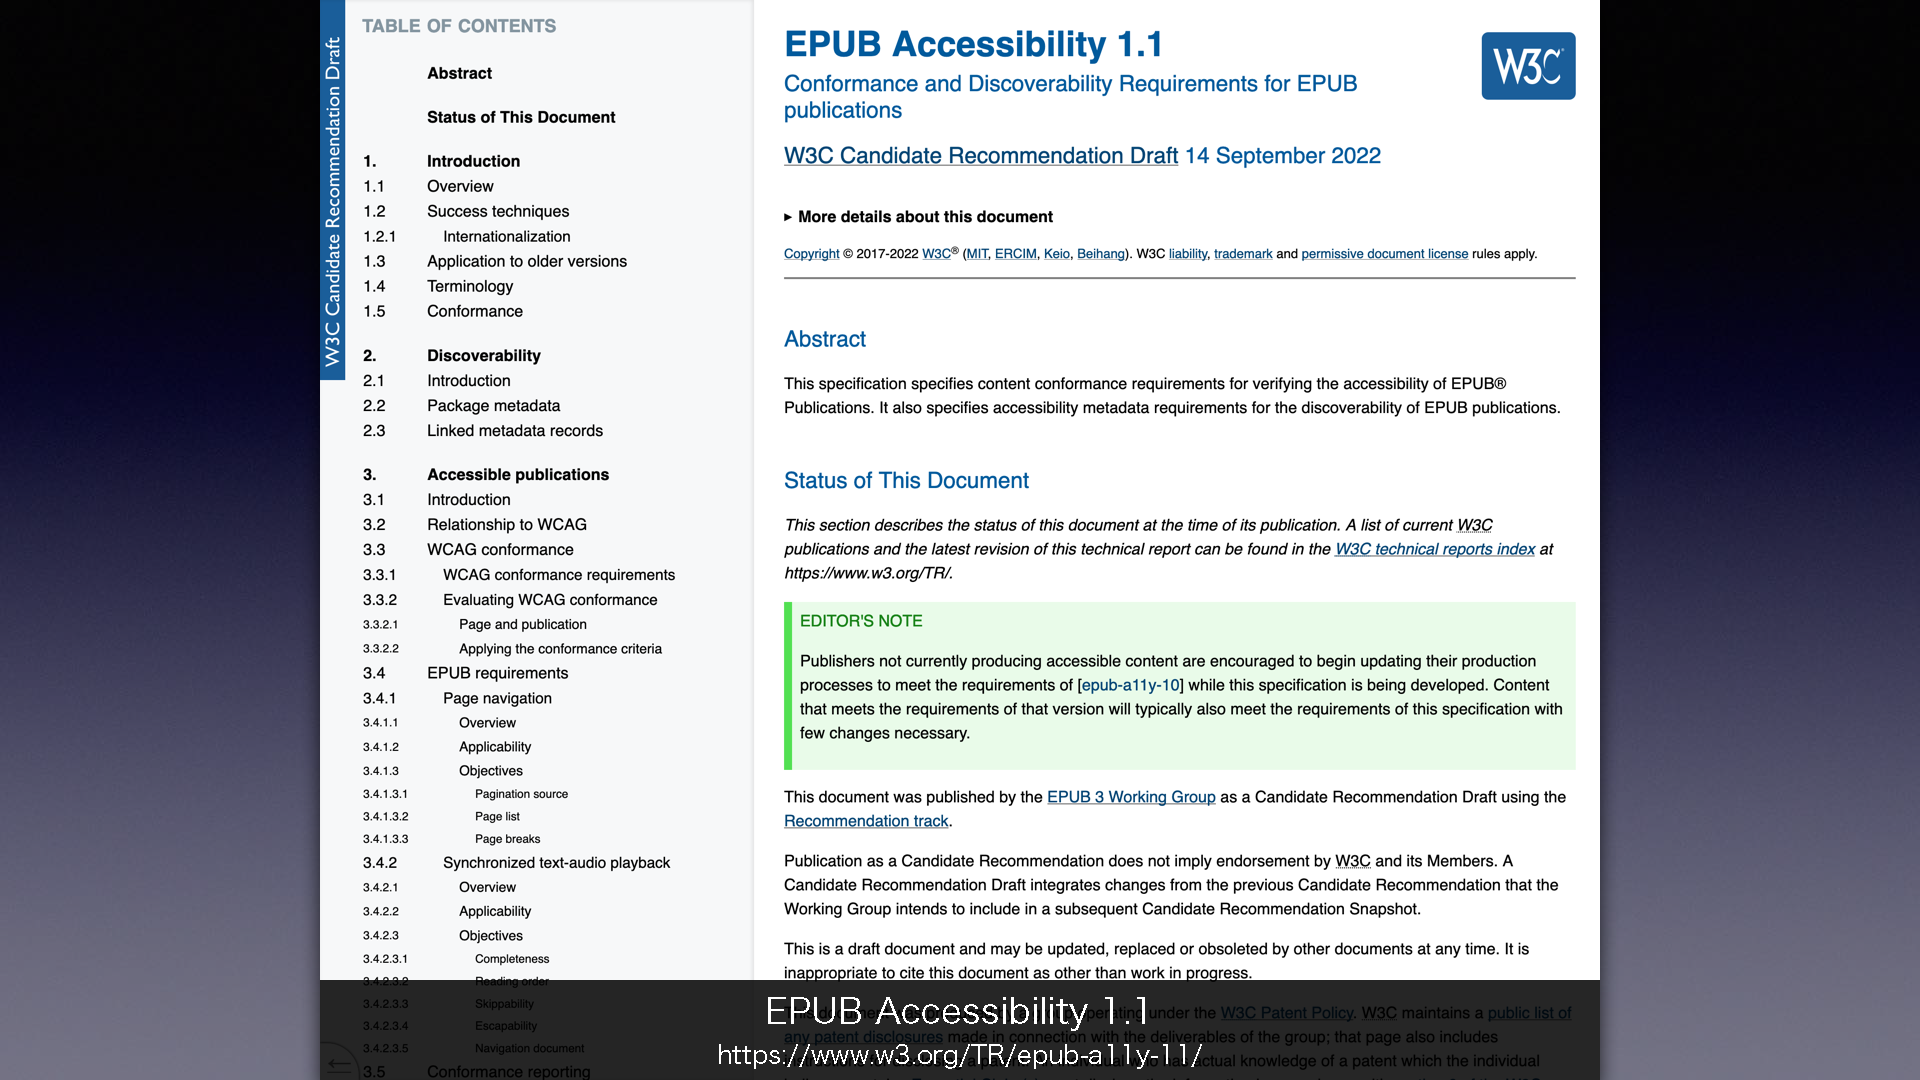 「EPUB Accessibility 1.1」について掲載されたウェブページの画像
	